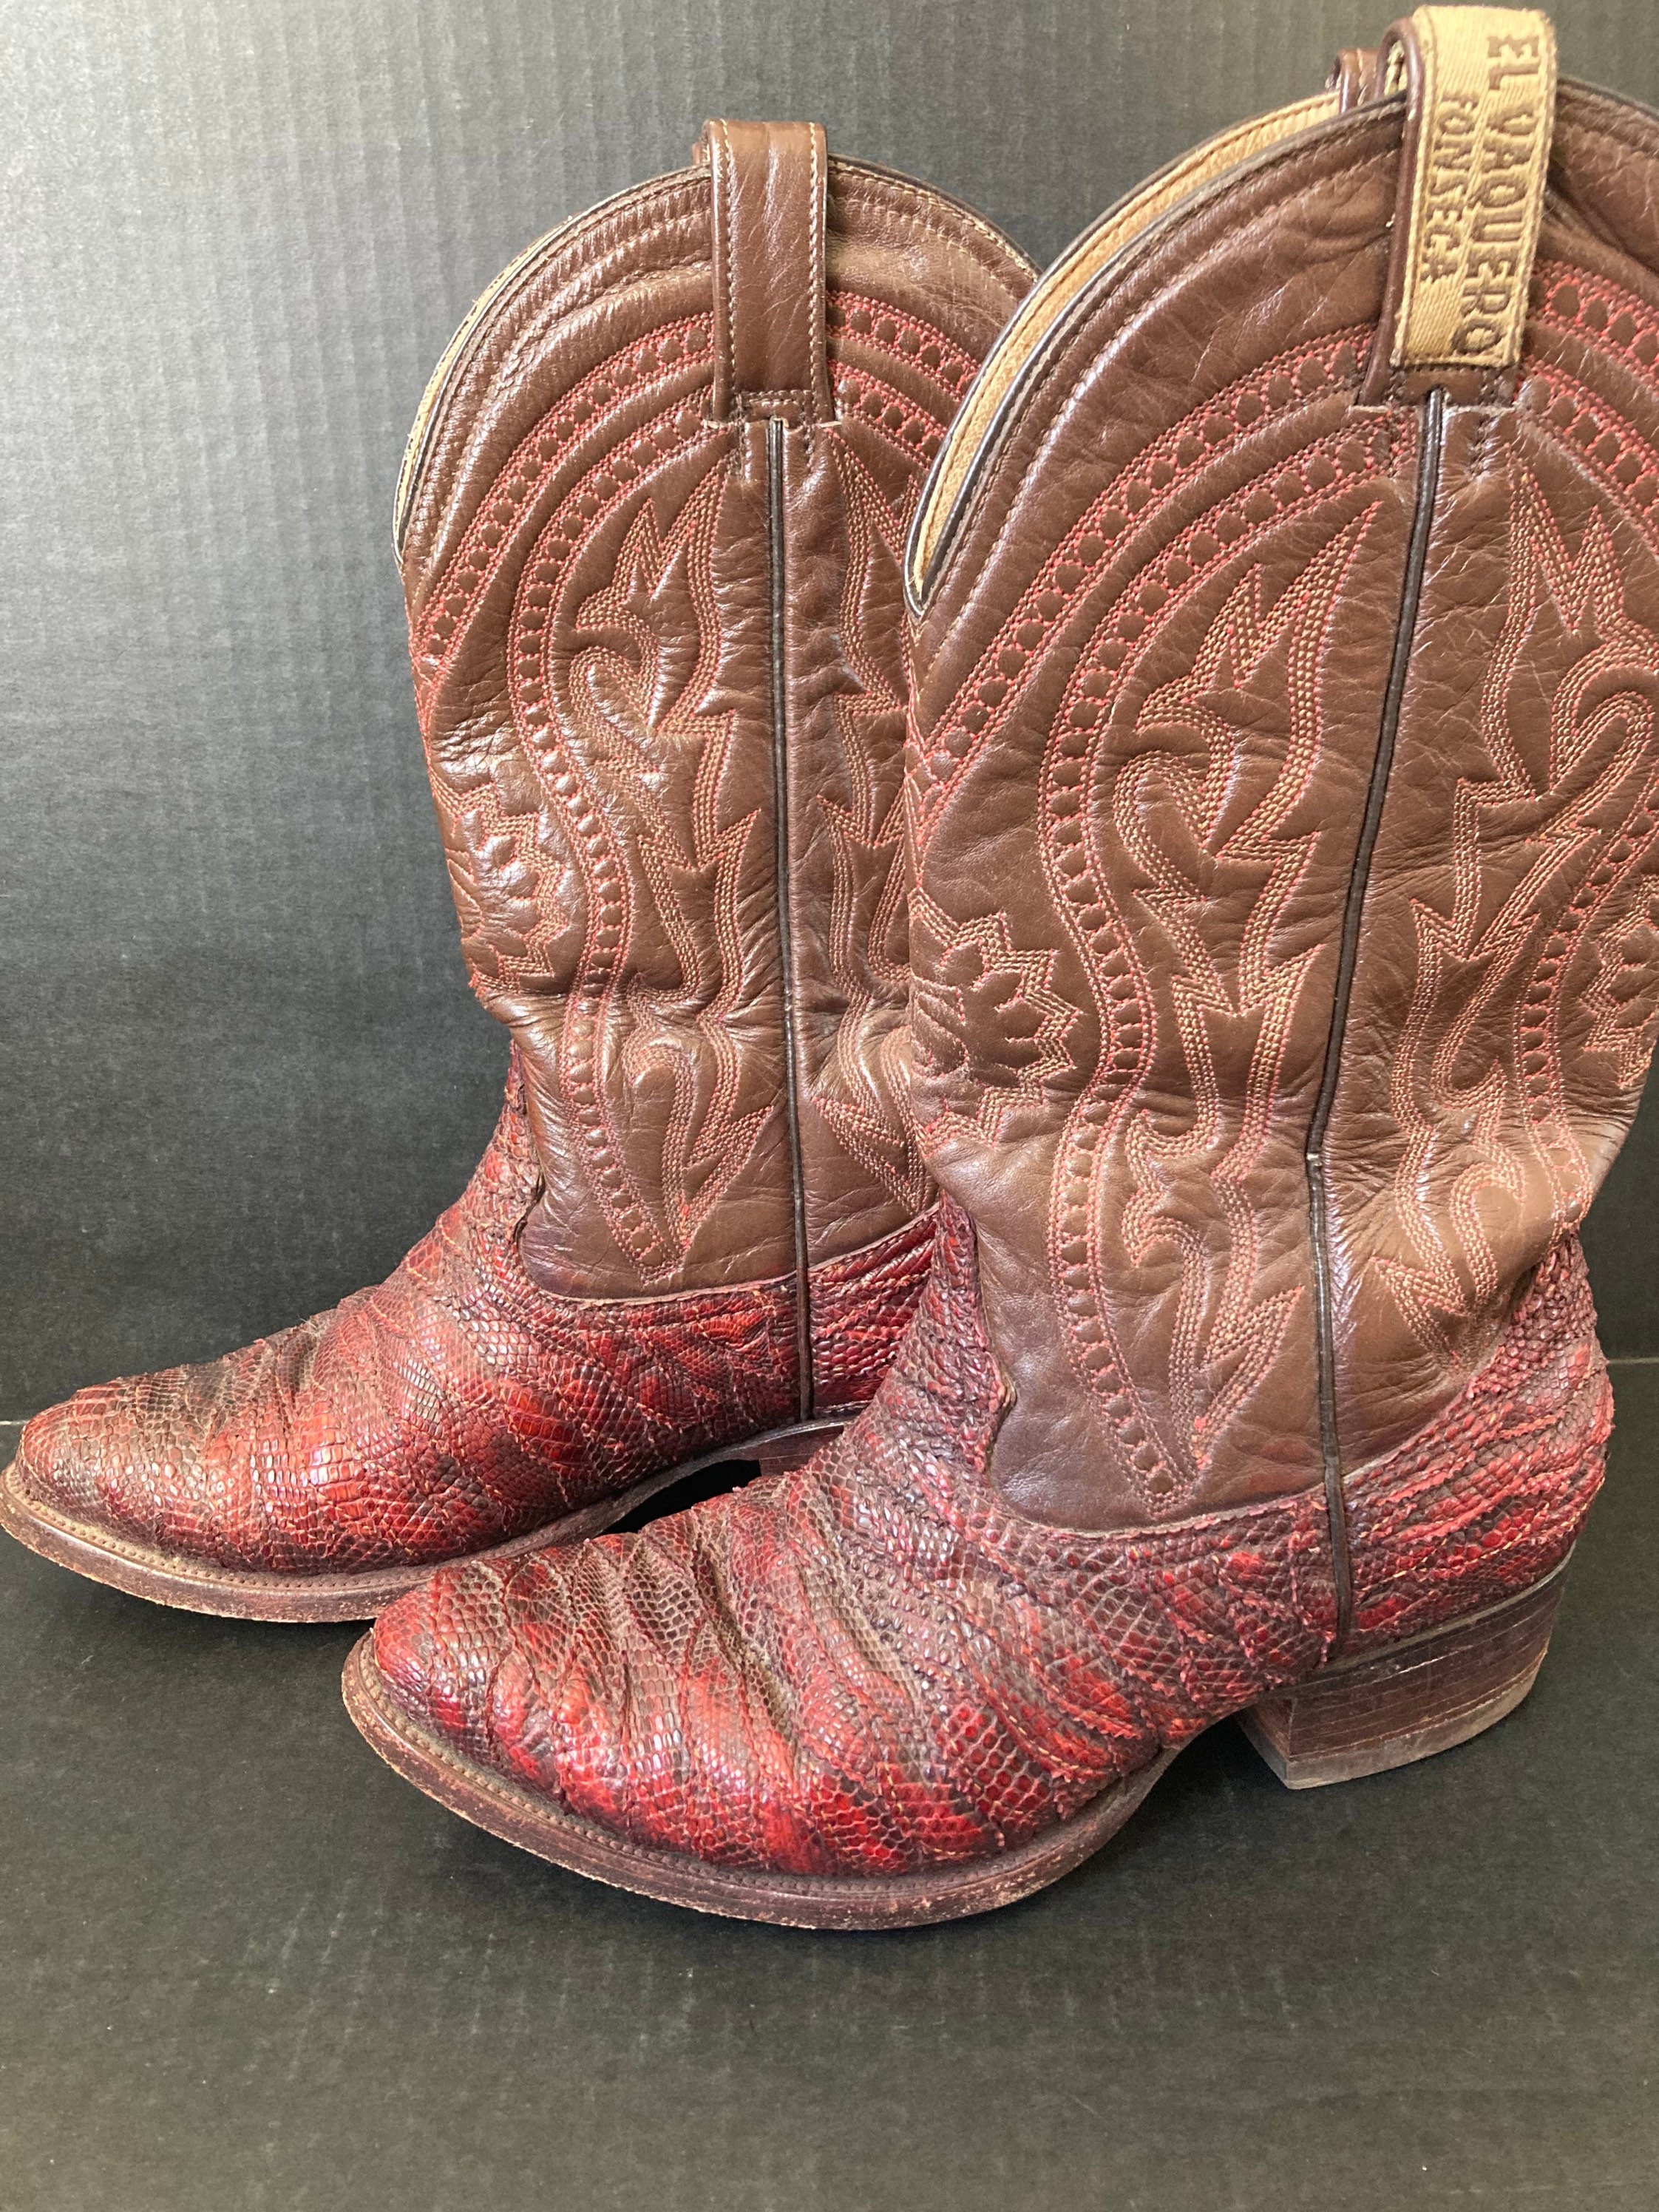 Vintage Men's Leather Cowboy Western Boot Size 9 El Vaquero Fonseca Wine Colored Lizard Skin Schoenen RARE 